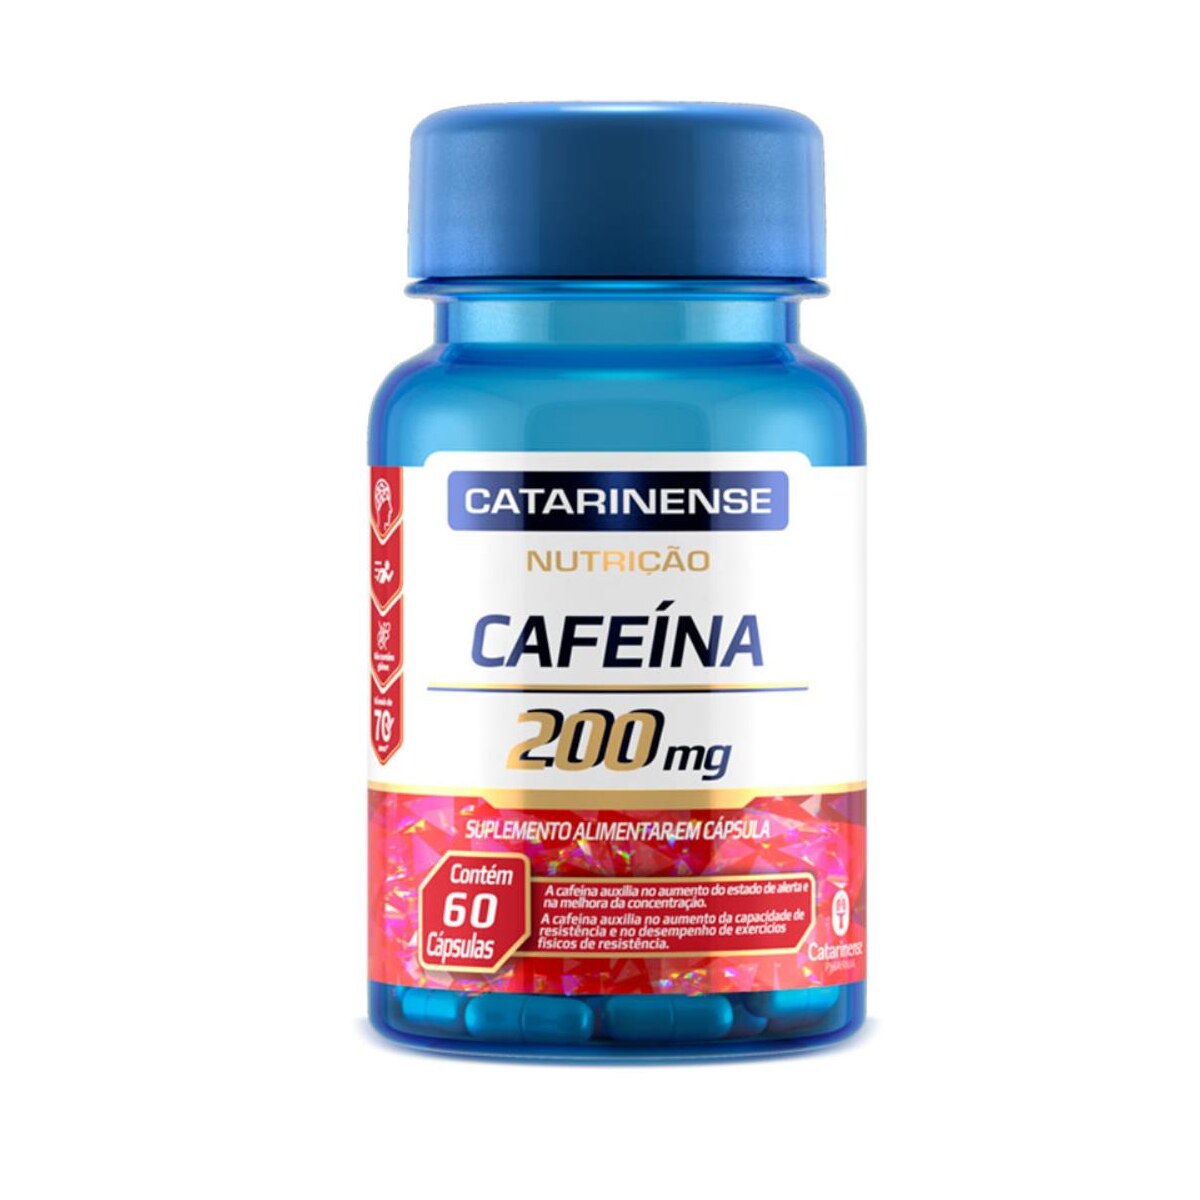 Cafeina 200mg Catarinense 60 Capsulas